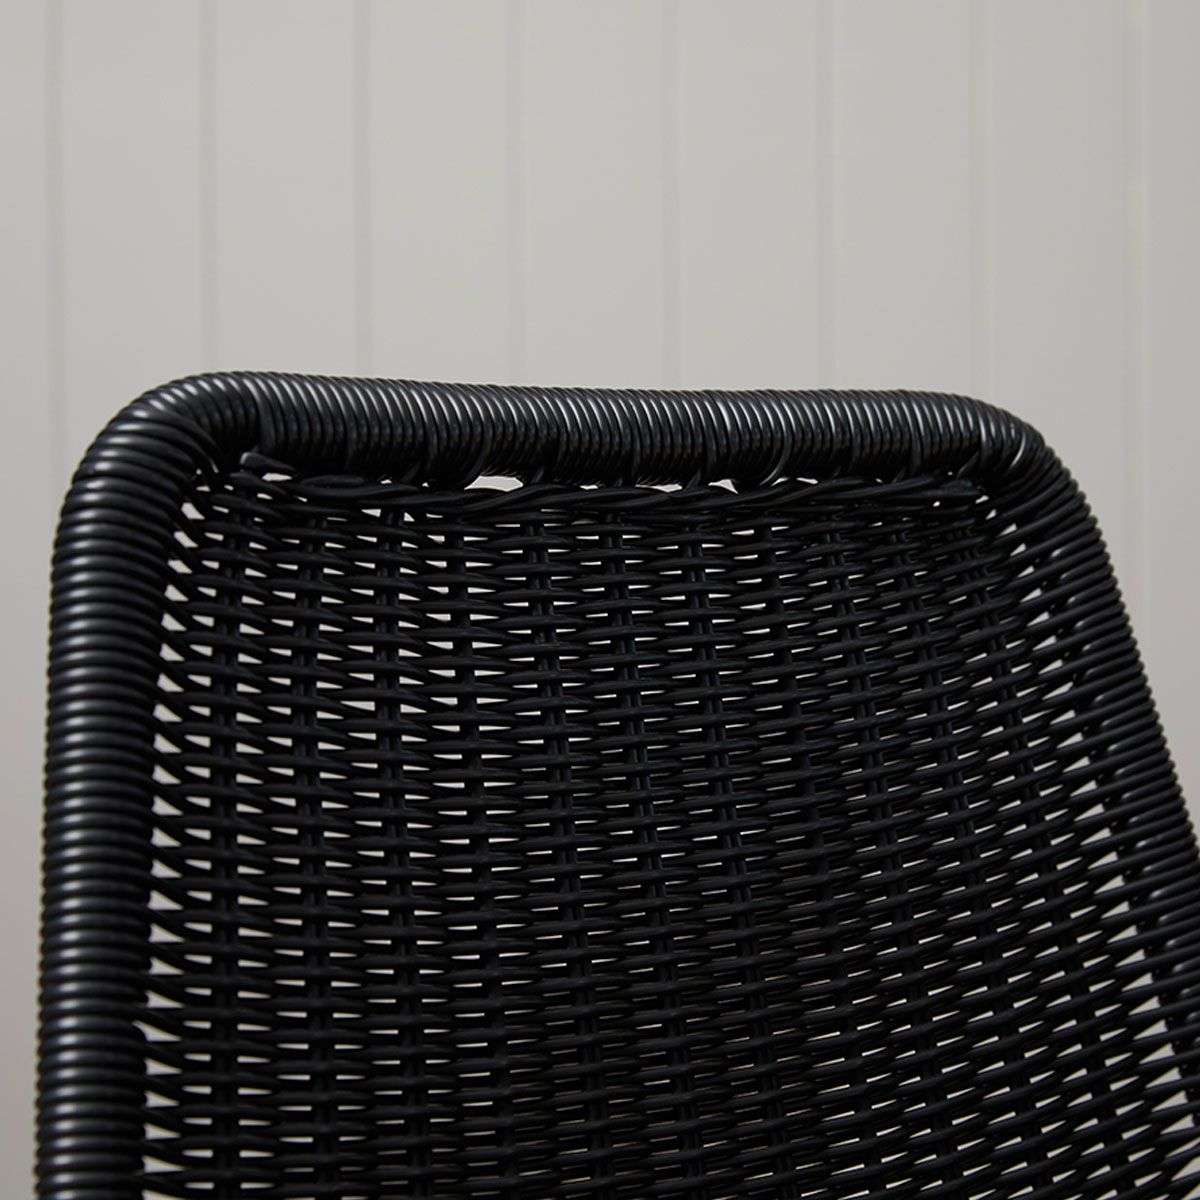 Xavier Dining Chair - Set of 2 - Black